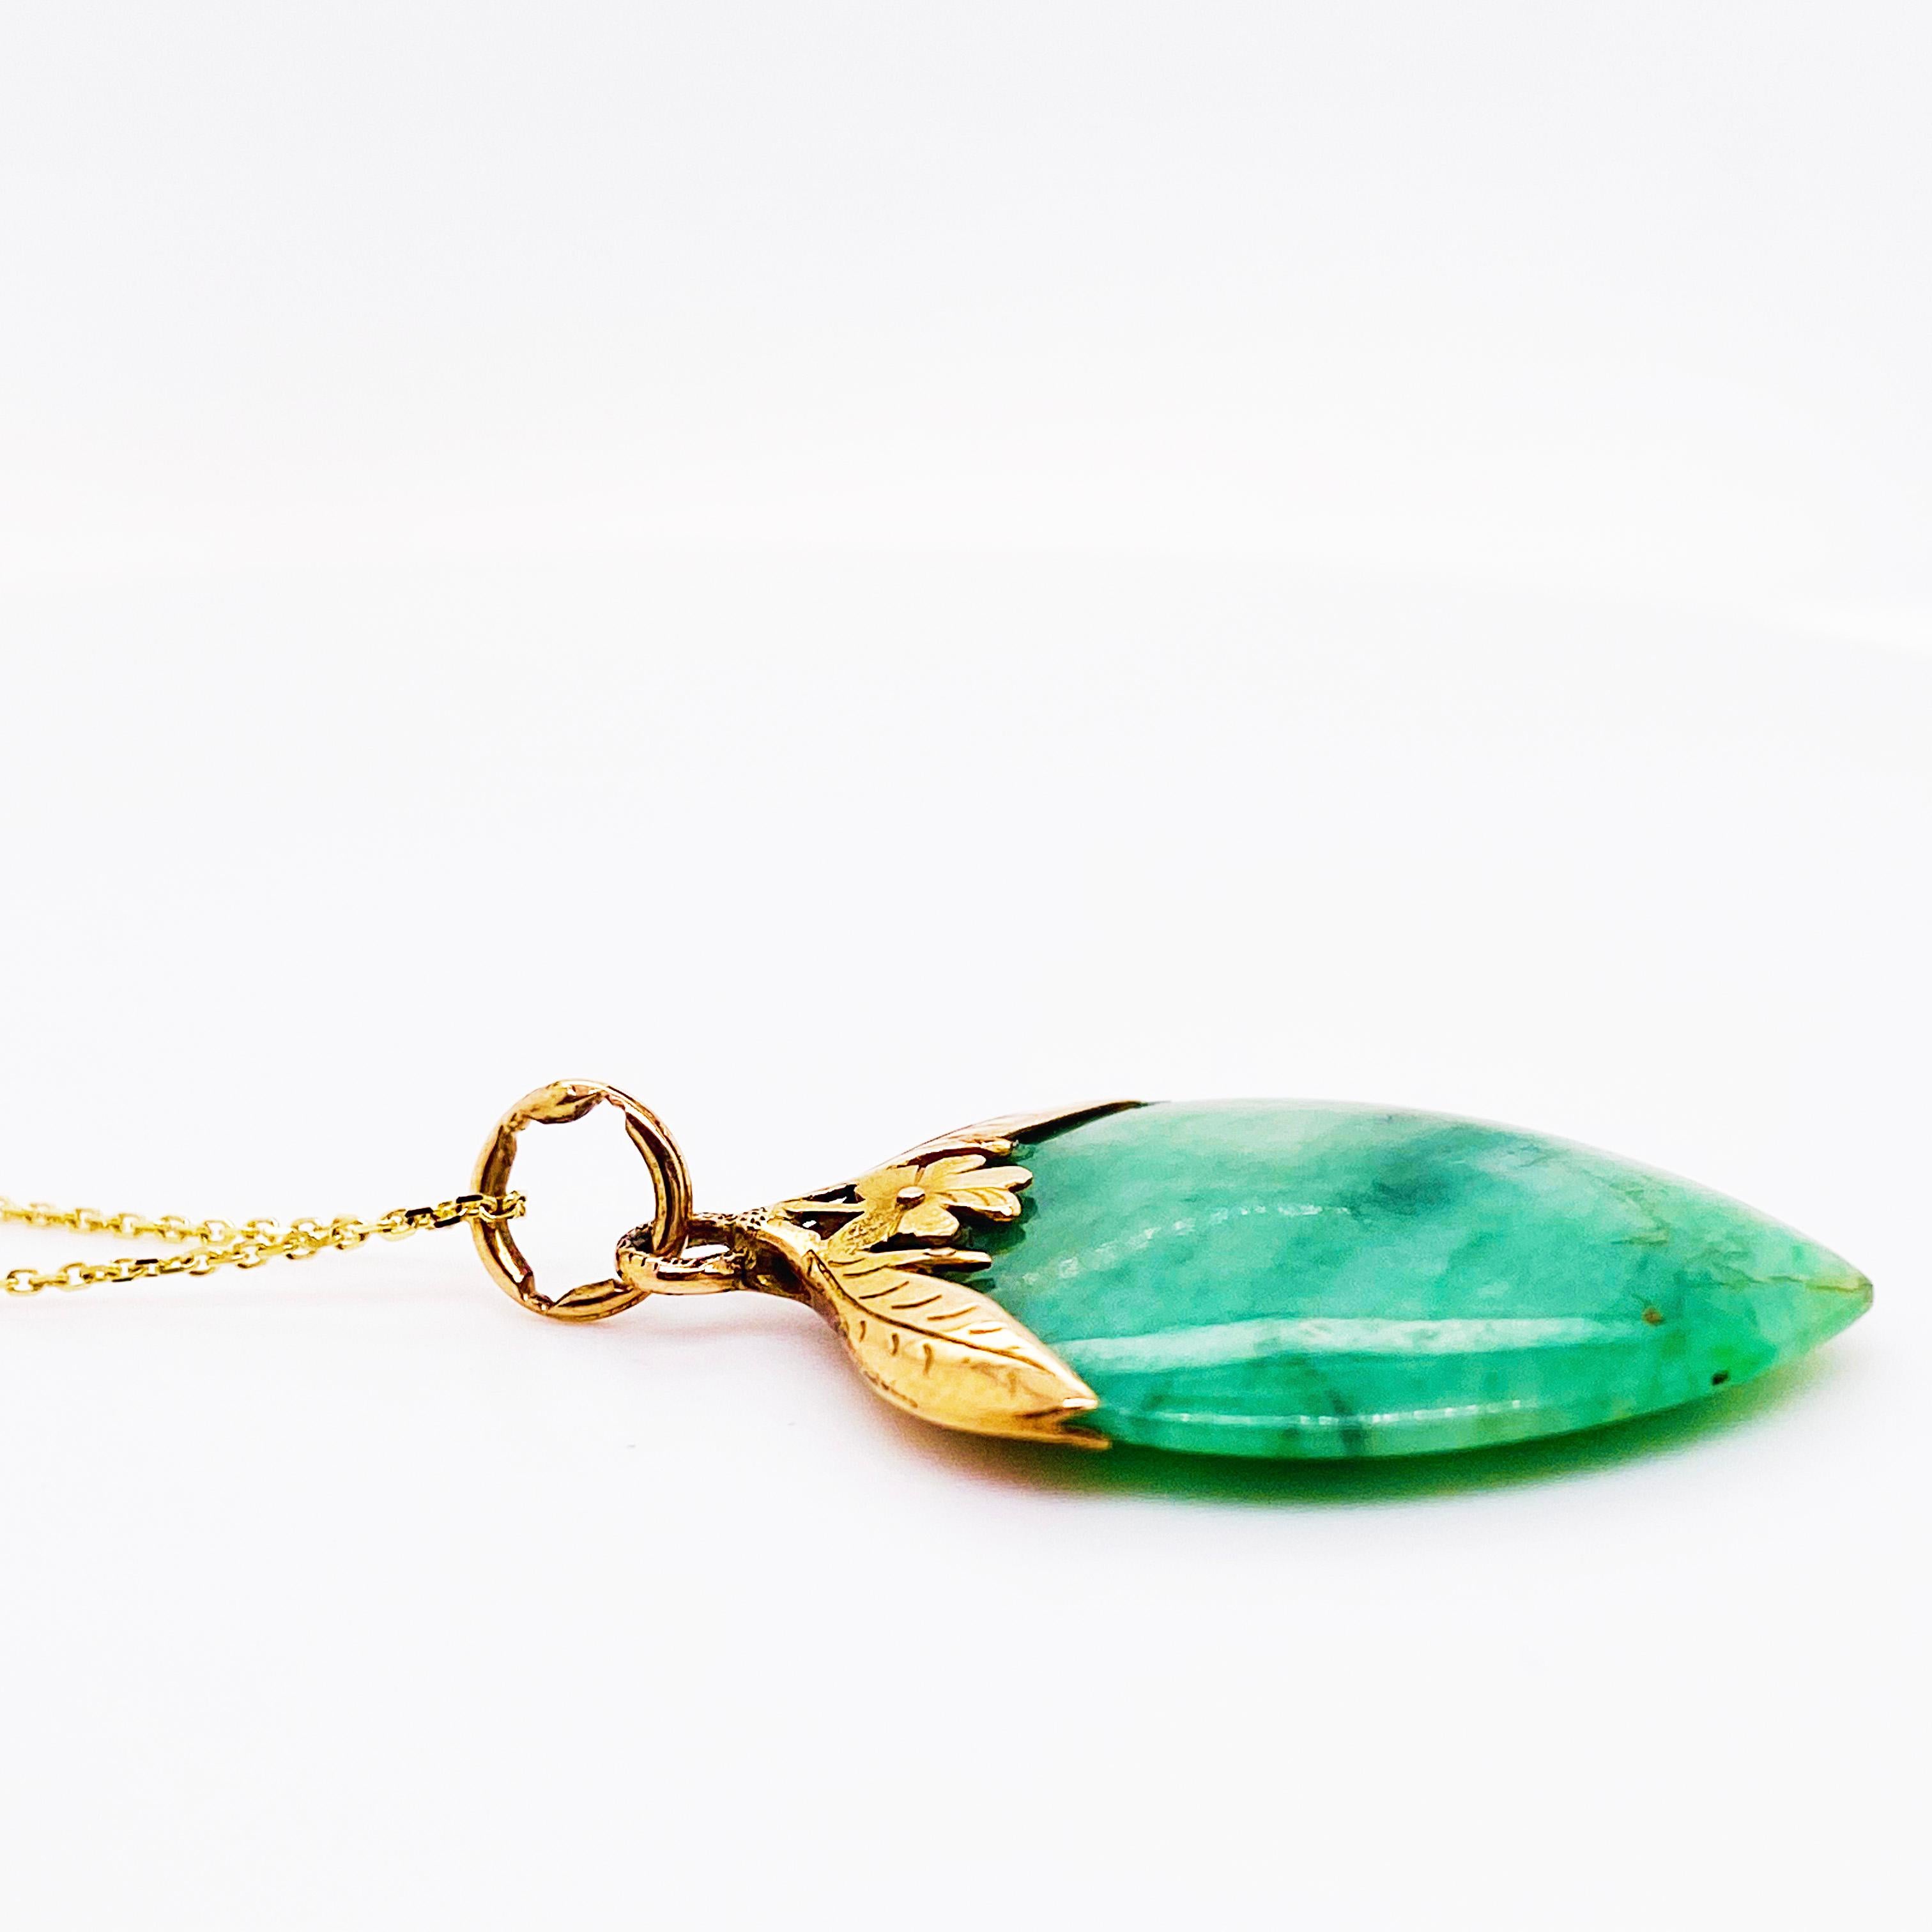 Cabochon Jade Jadeite Antique Pendant Necklace with Leaf Design on the Top 14 Karat Gold